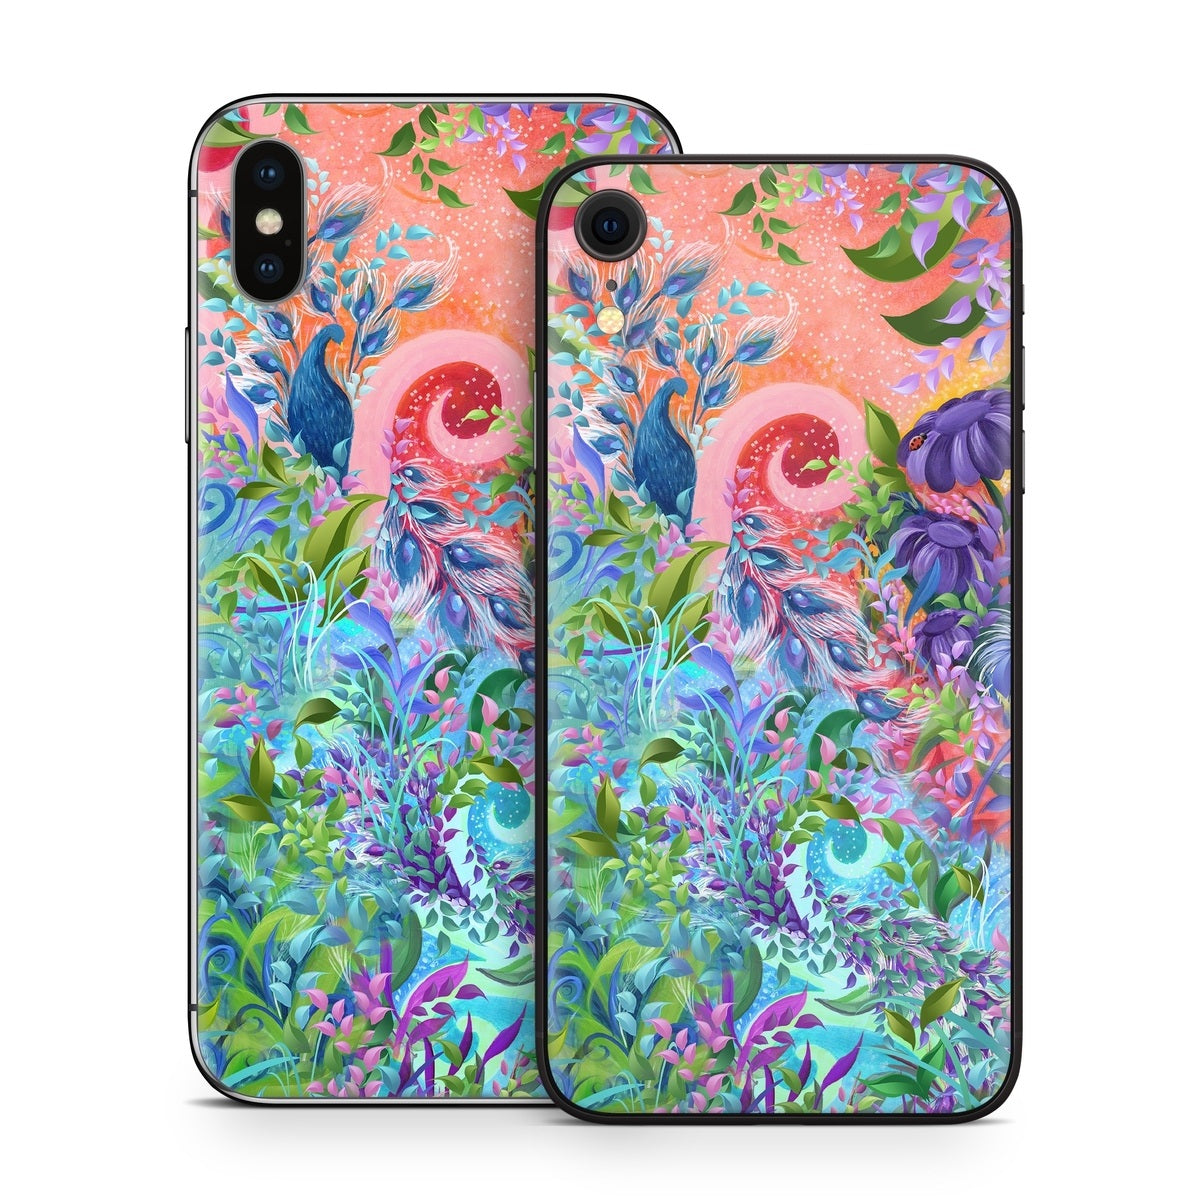 Fantasy Garden - Apple iPhone X Skin